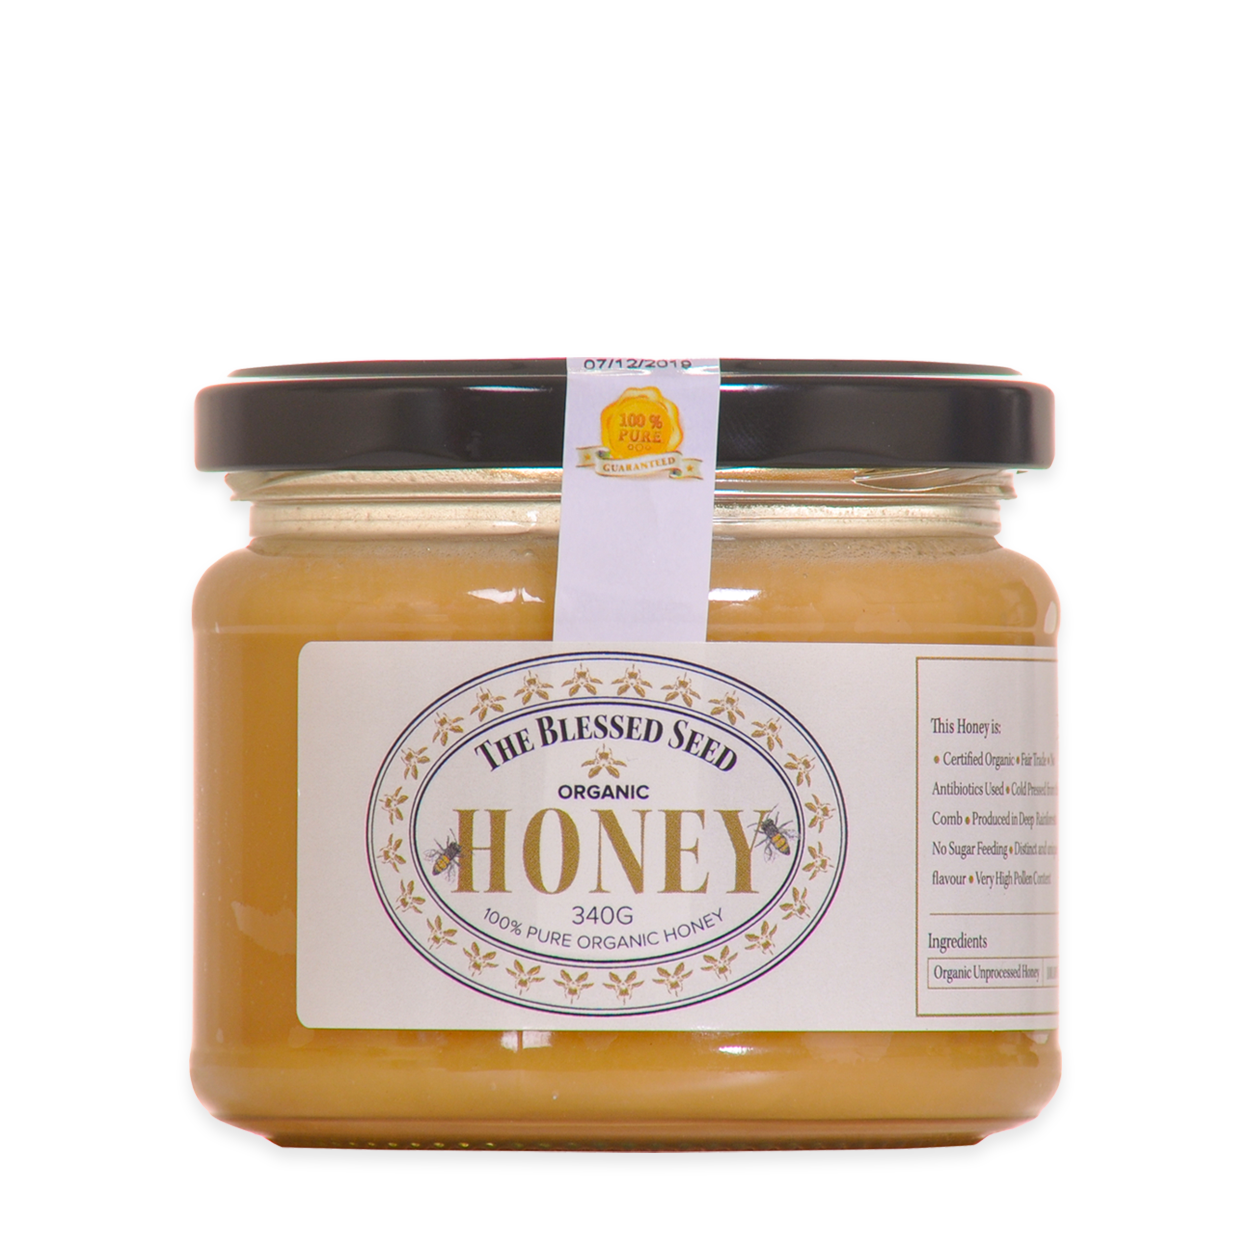 Honey london. Organic Honey. Емкость для меда in the Forest. Organic Honey London. Bashkirian Organic Honey.